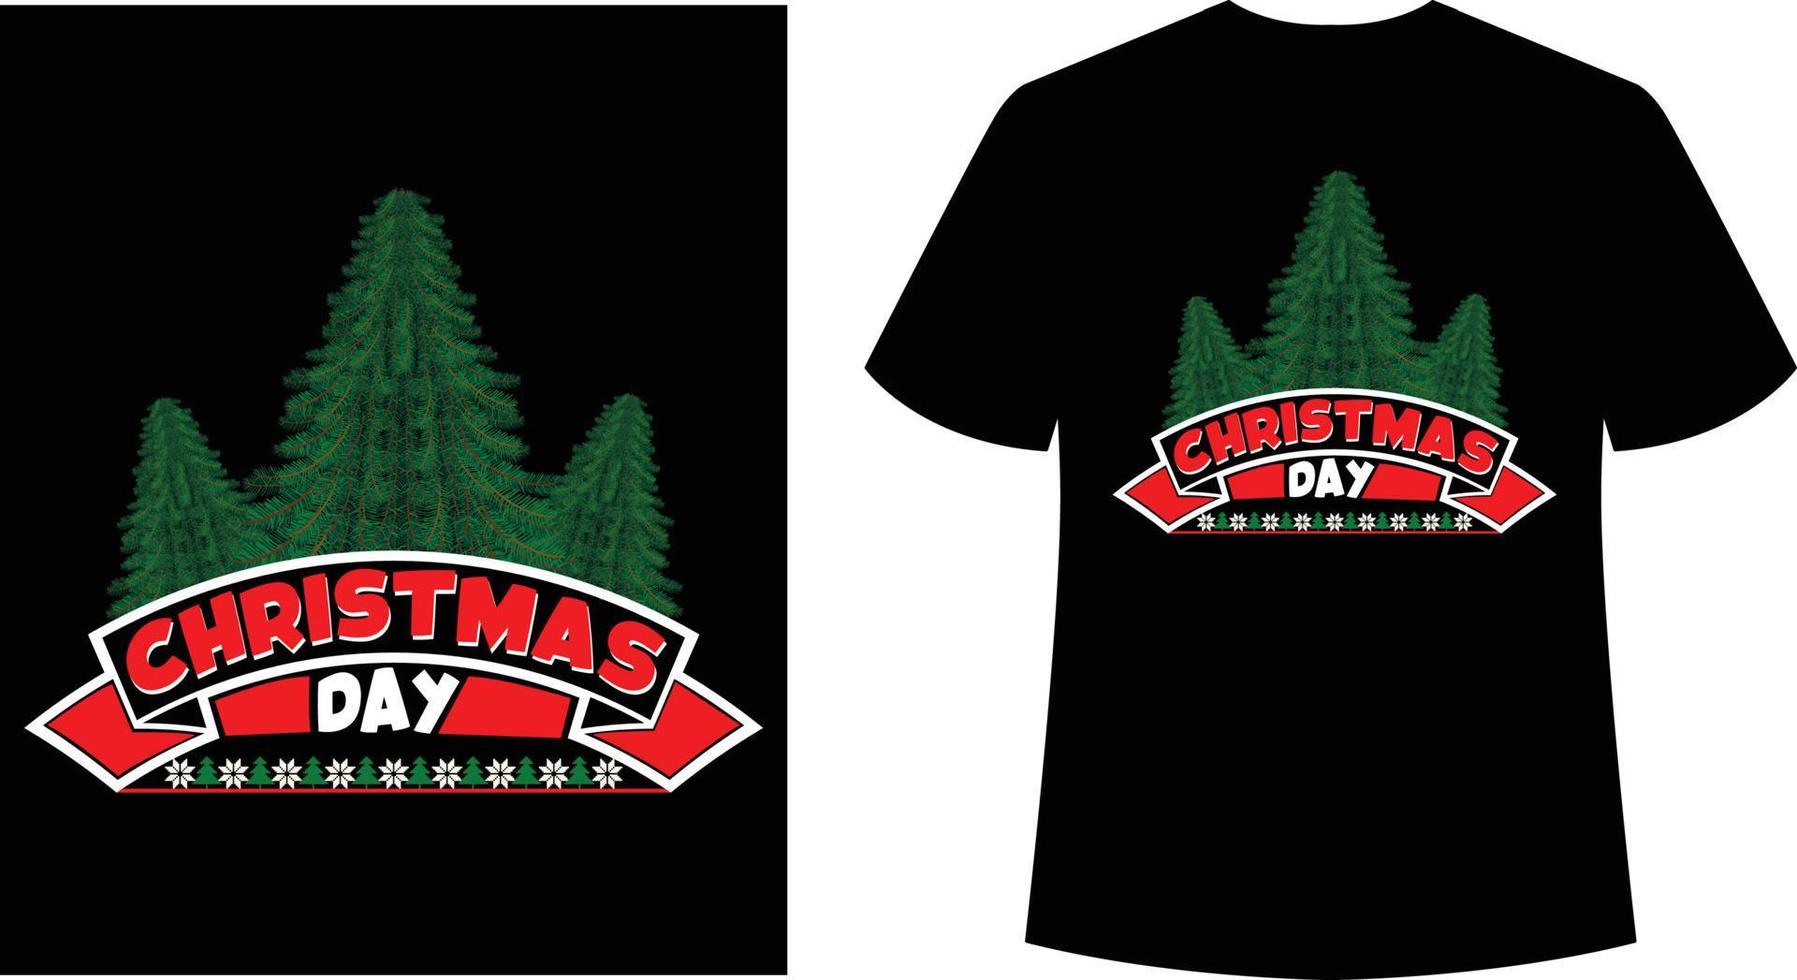 x-mas dag eller jul dag t-shirt design vektor